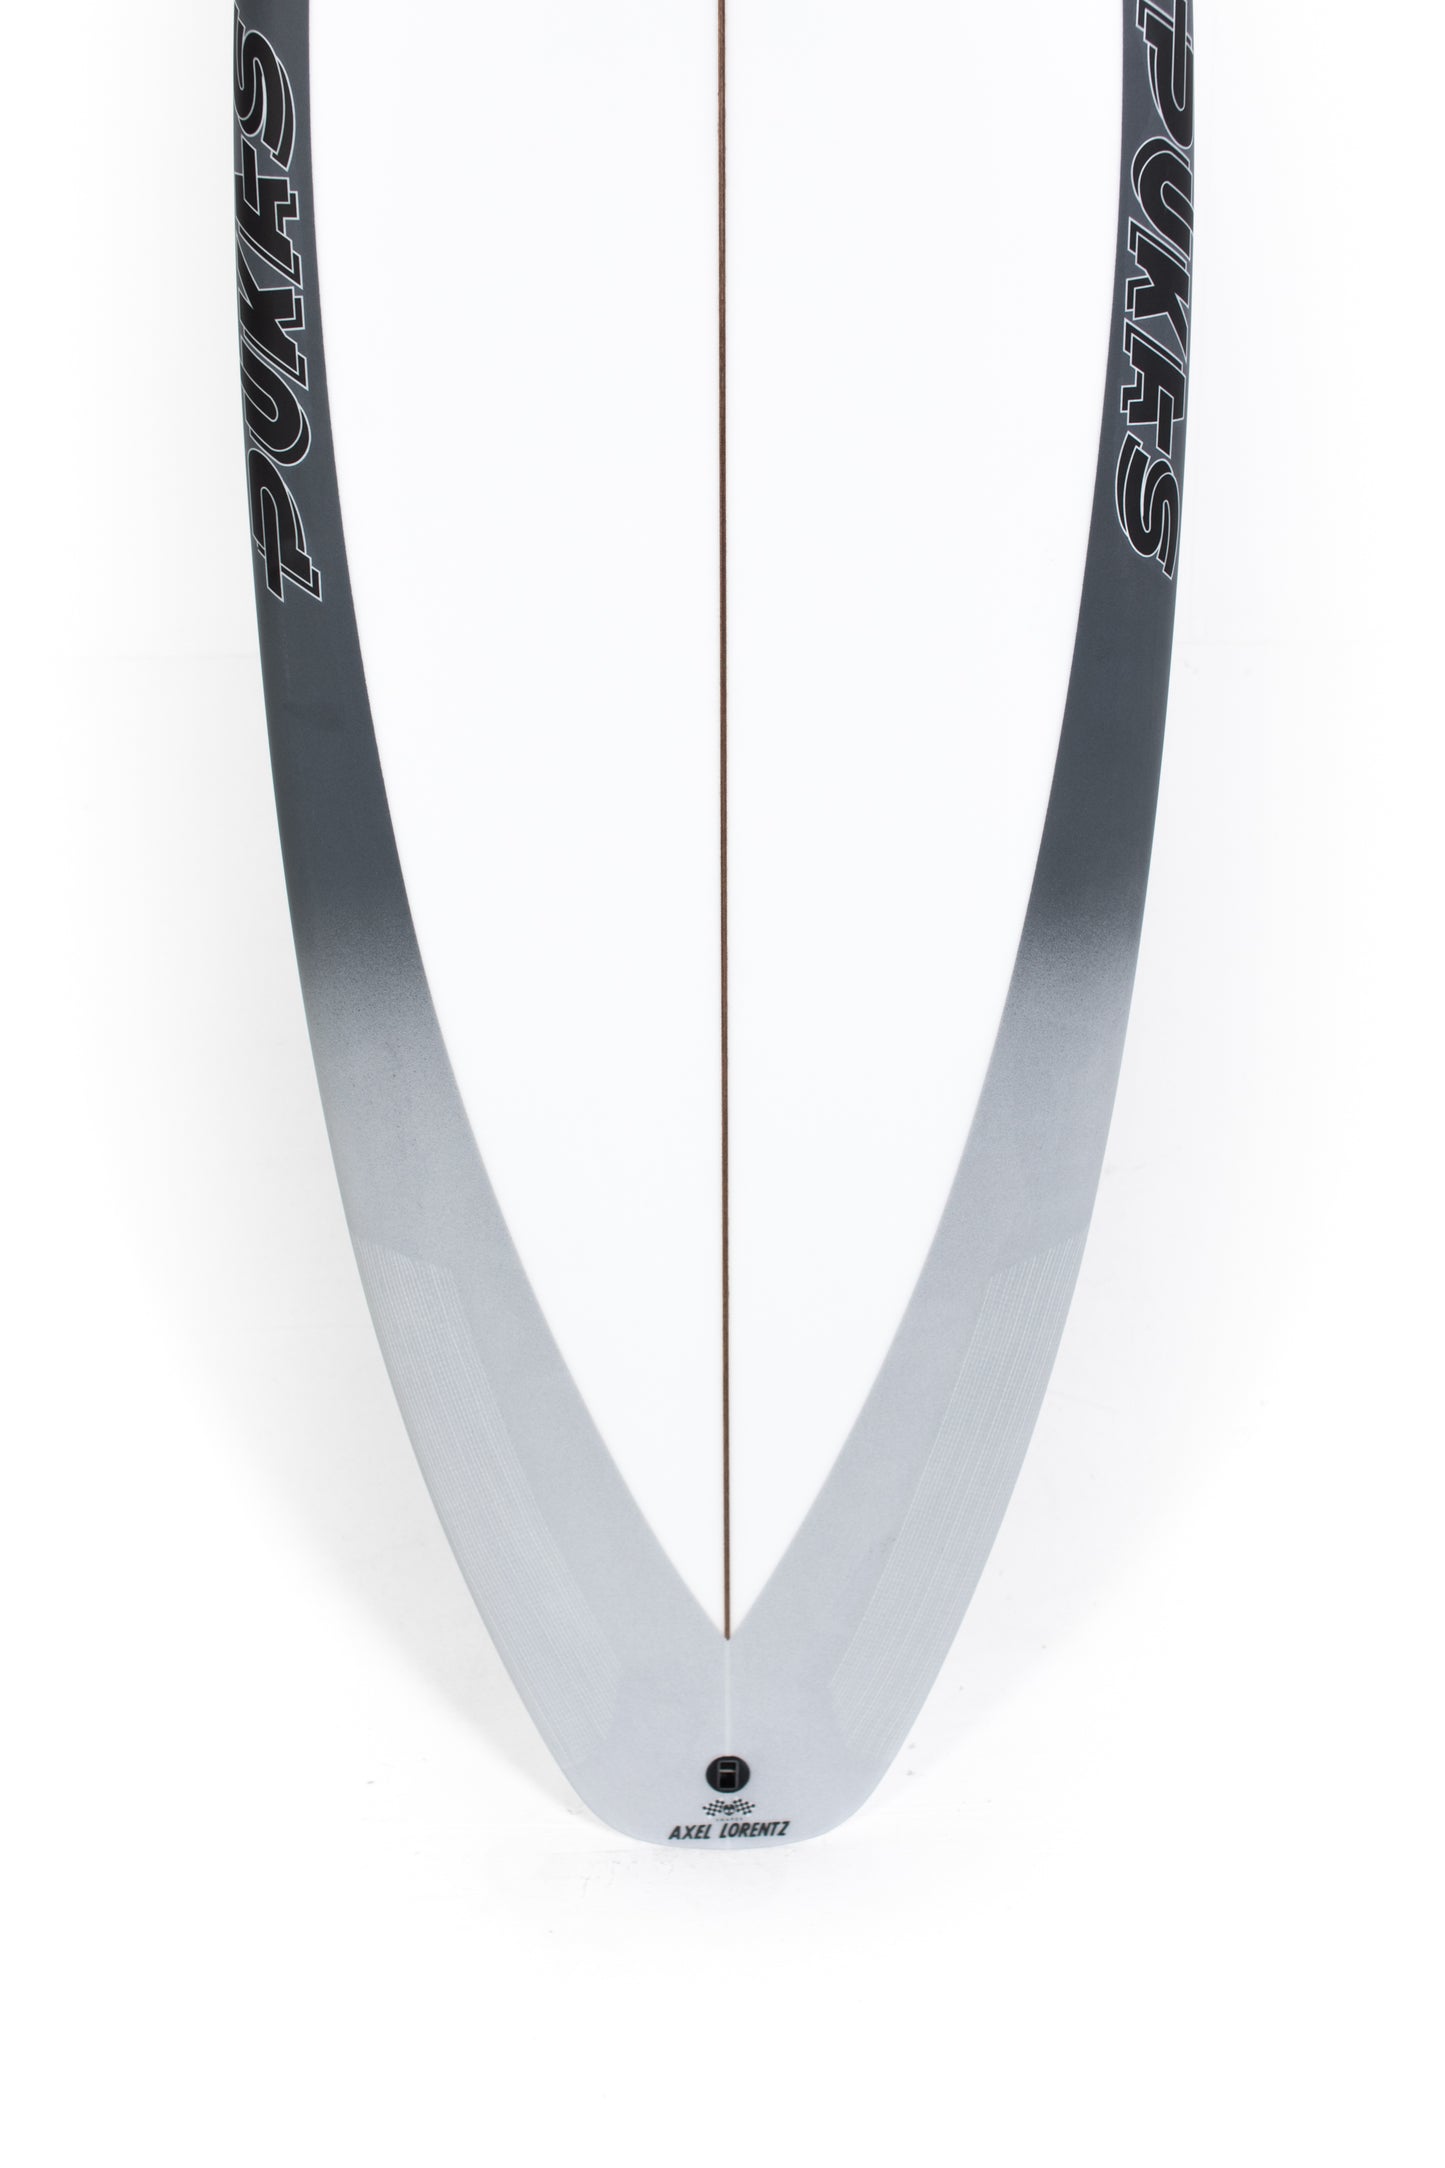 
                  
                    Pukas Surf Shop - Pukas Surfboard - TASTY TREAT ALL ROUND by Axel Lorentz - 6'0" x 19.63 x 2.55 x 31.96L - AX09873
                  
                